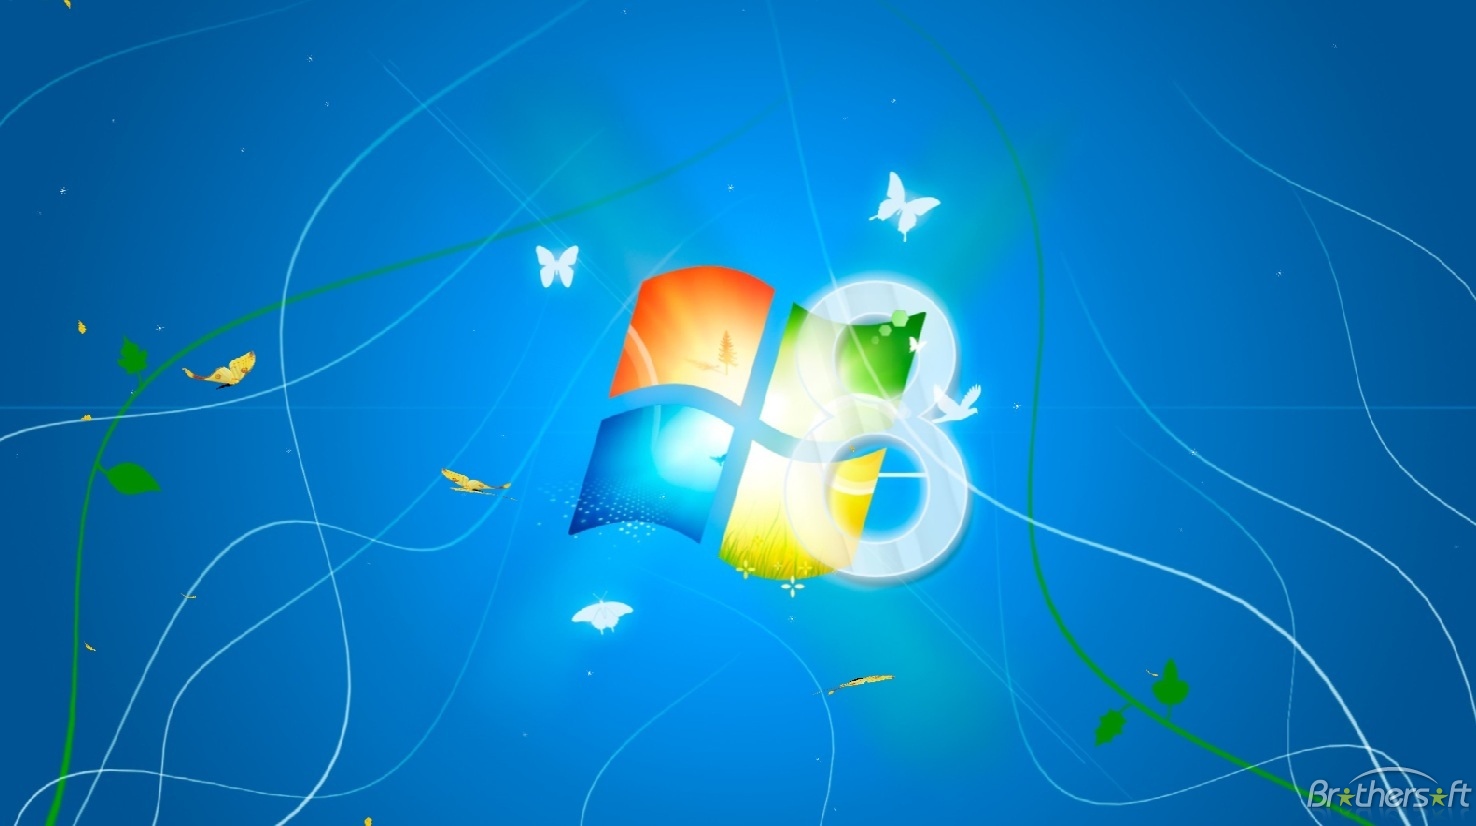 Free Windows 8 Light Animated Wallpaper Windows 8 Light Animated 1476x826